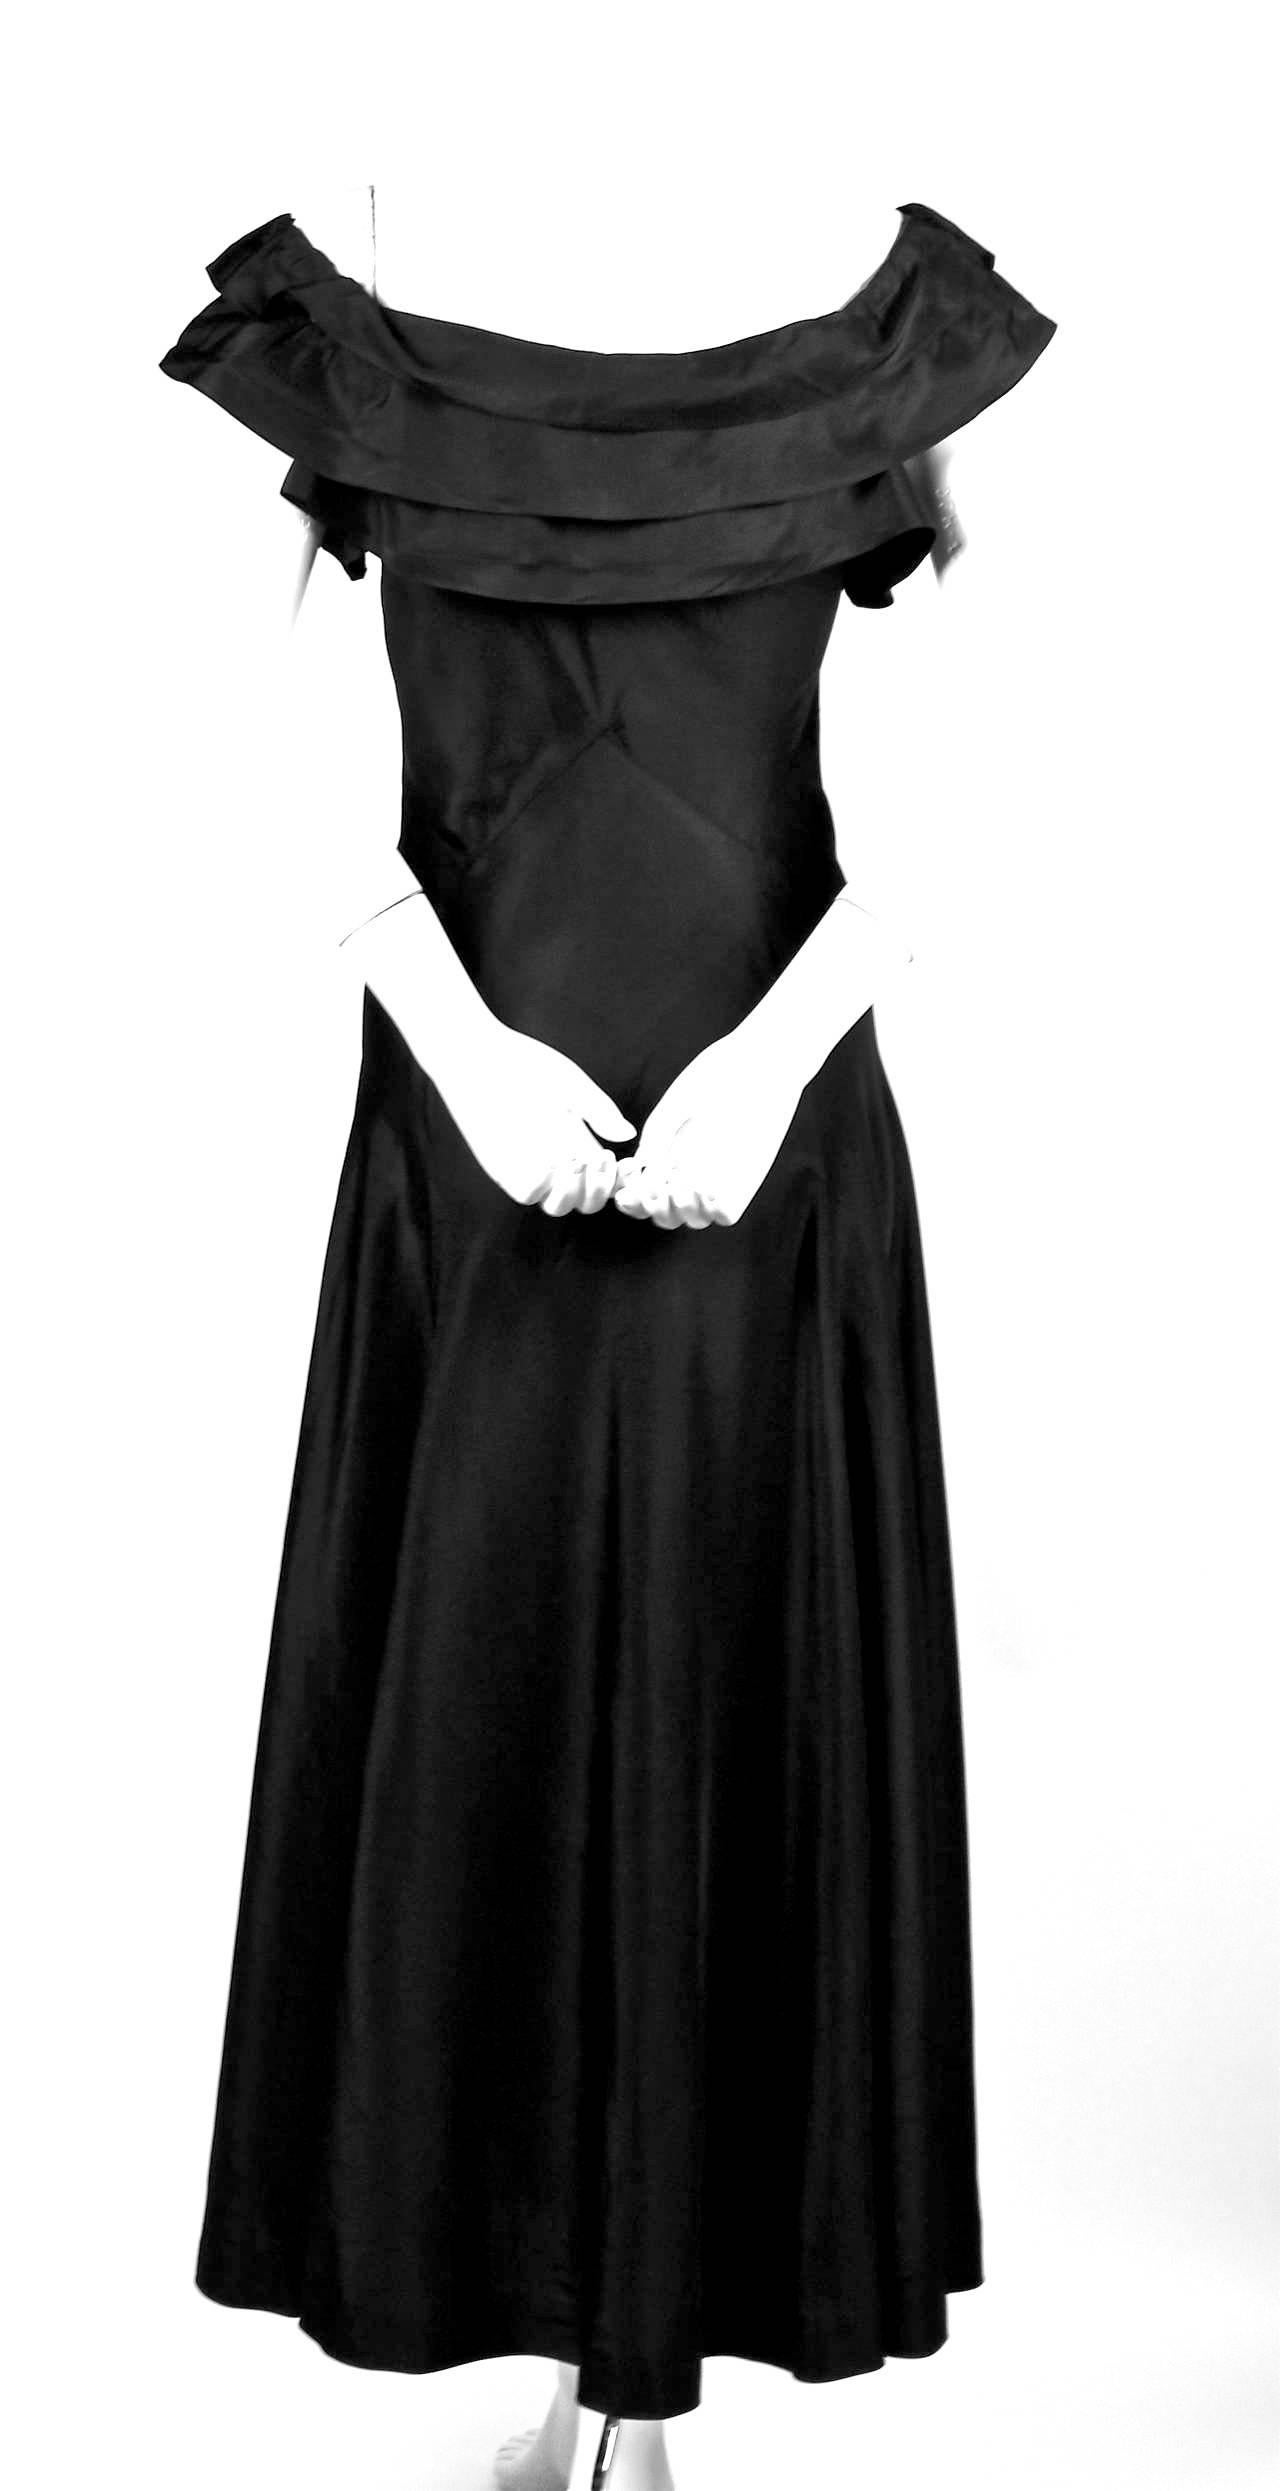 Black rare 1933 JEANNE LANVIN haute couture black evening dress